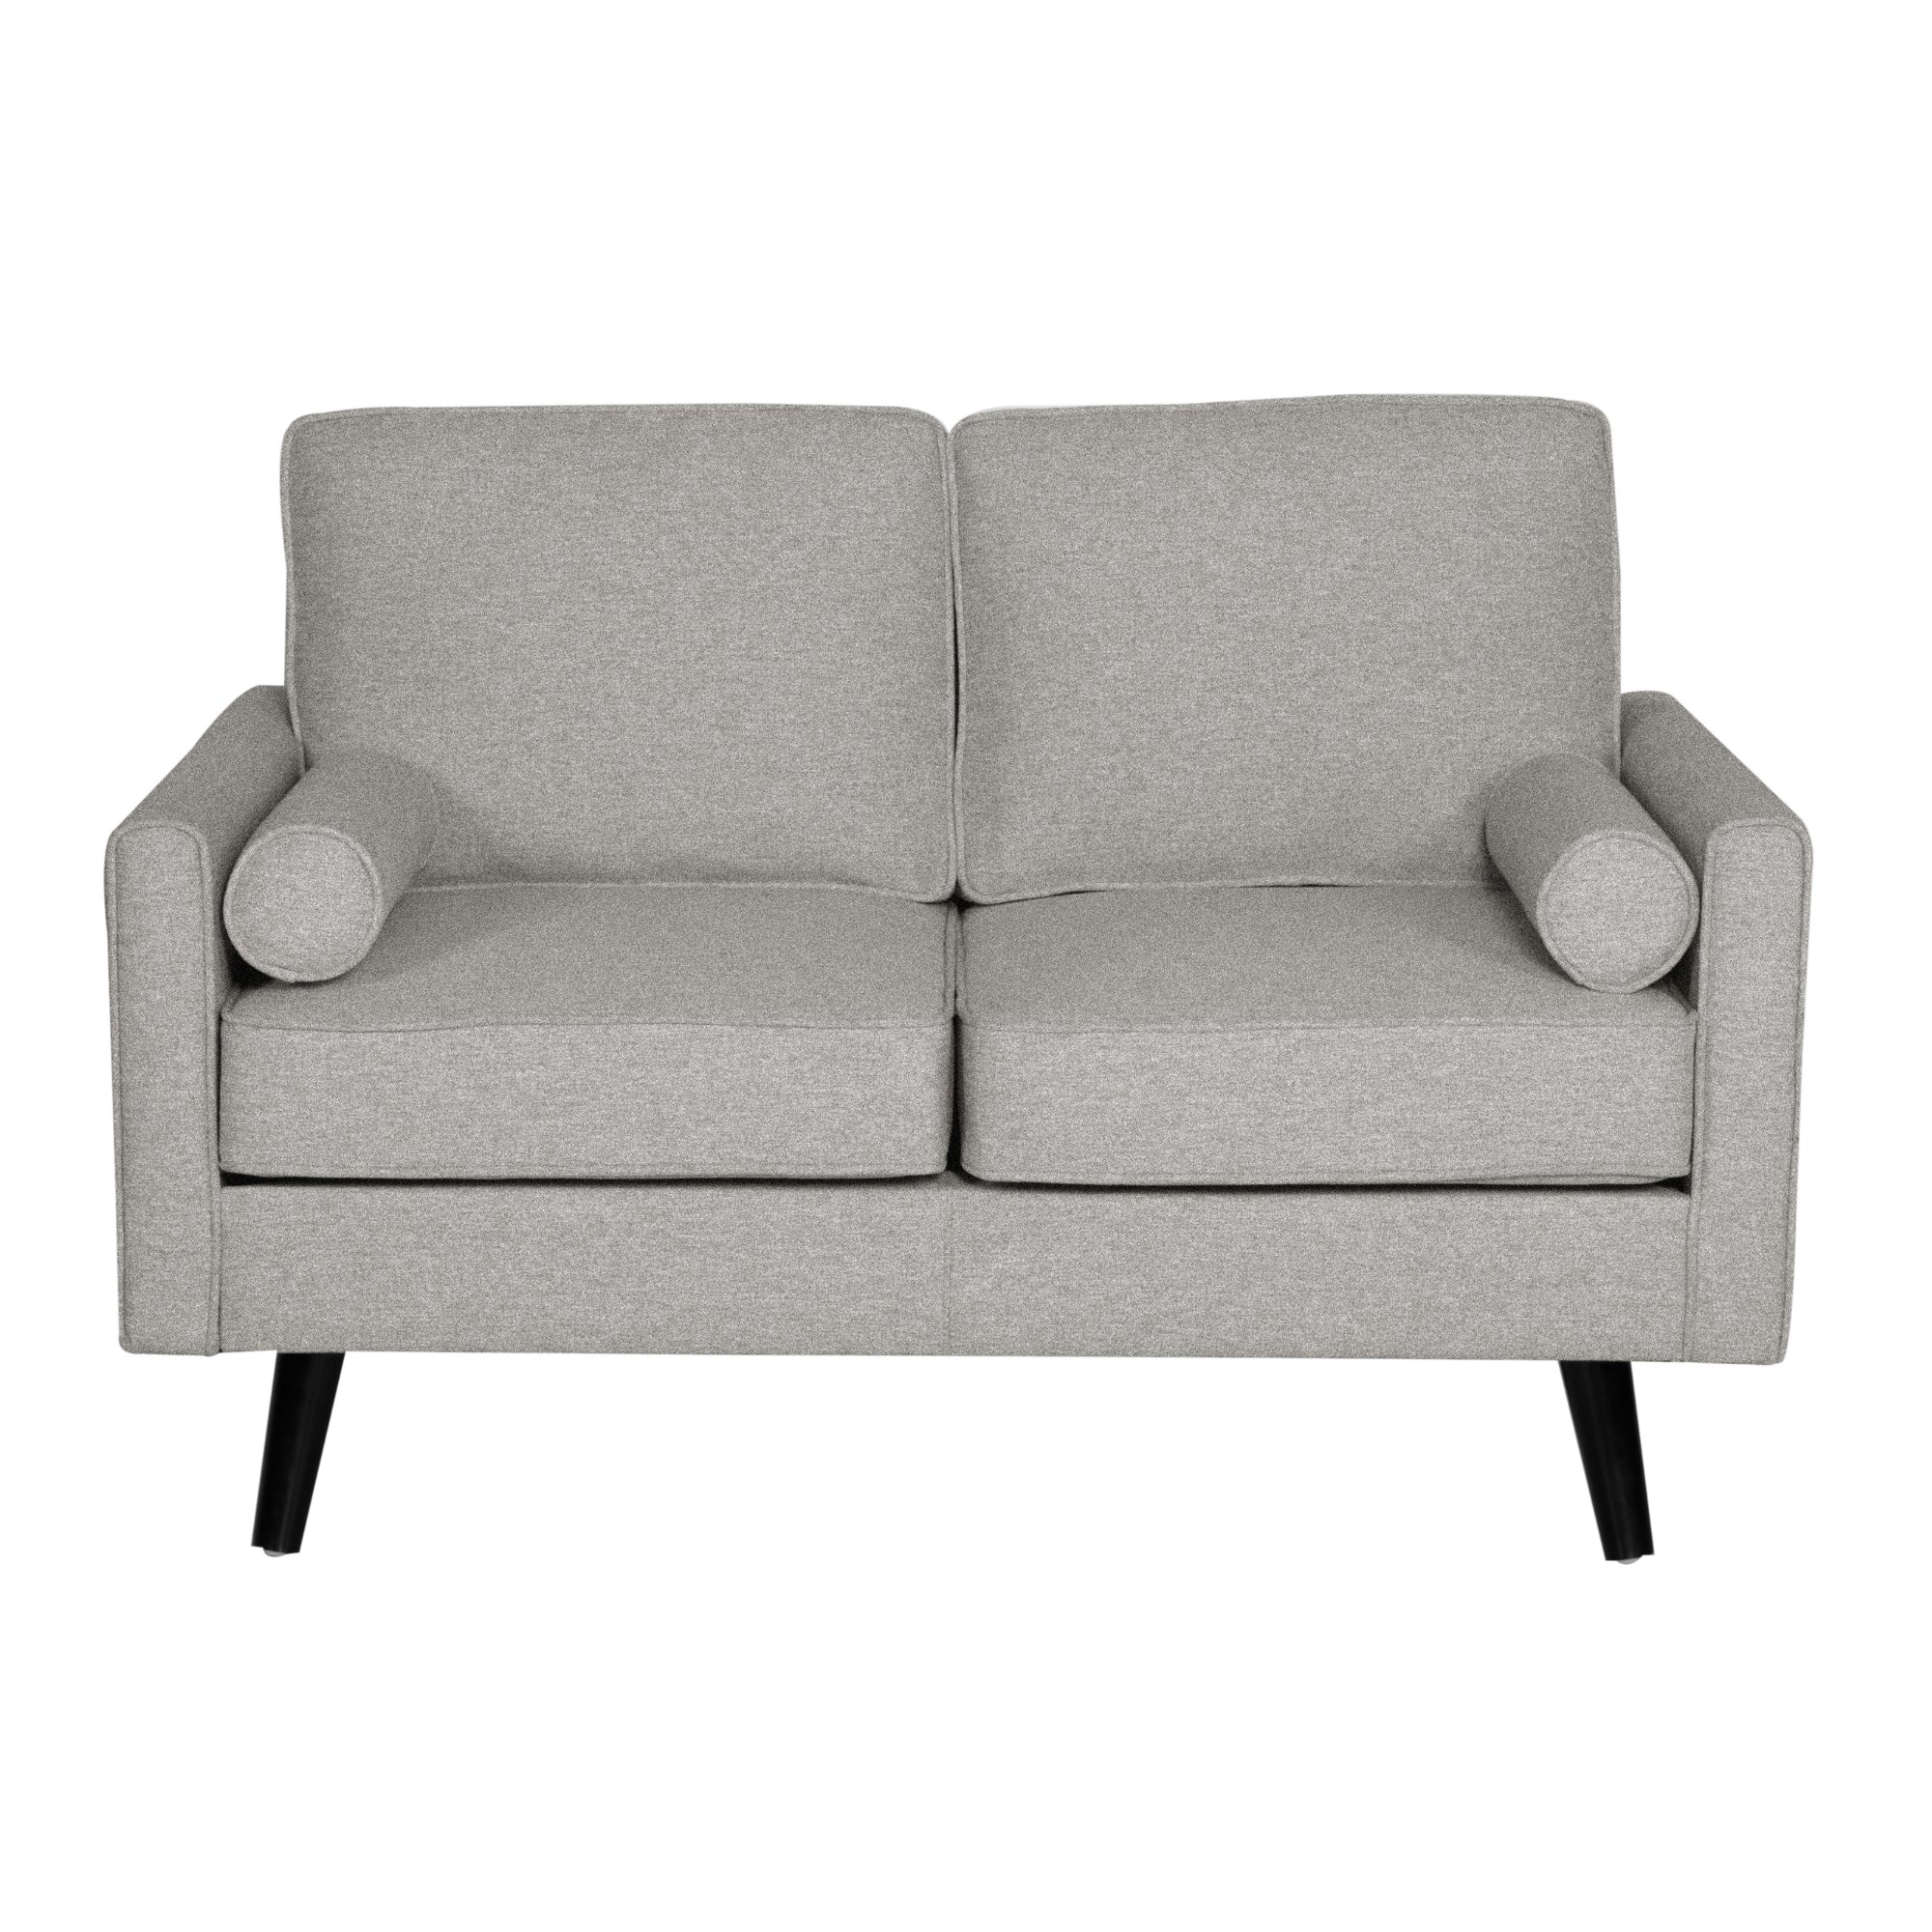 Light Grey Compact Fabric Sofa Set, 2+2.5 Seater, Scandinavian Style